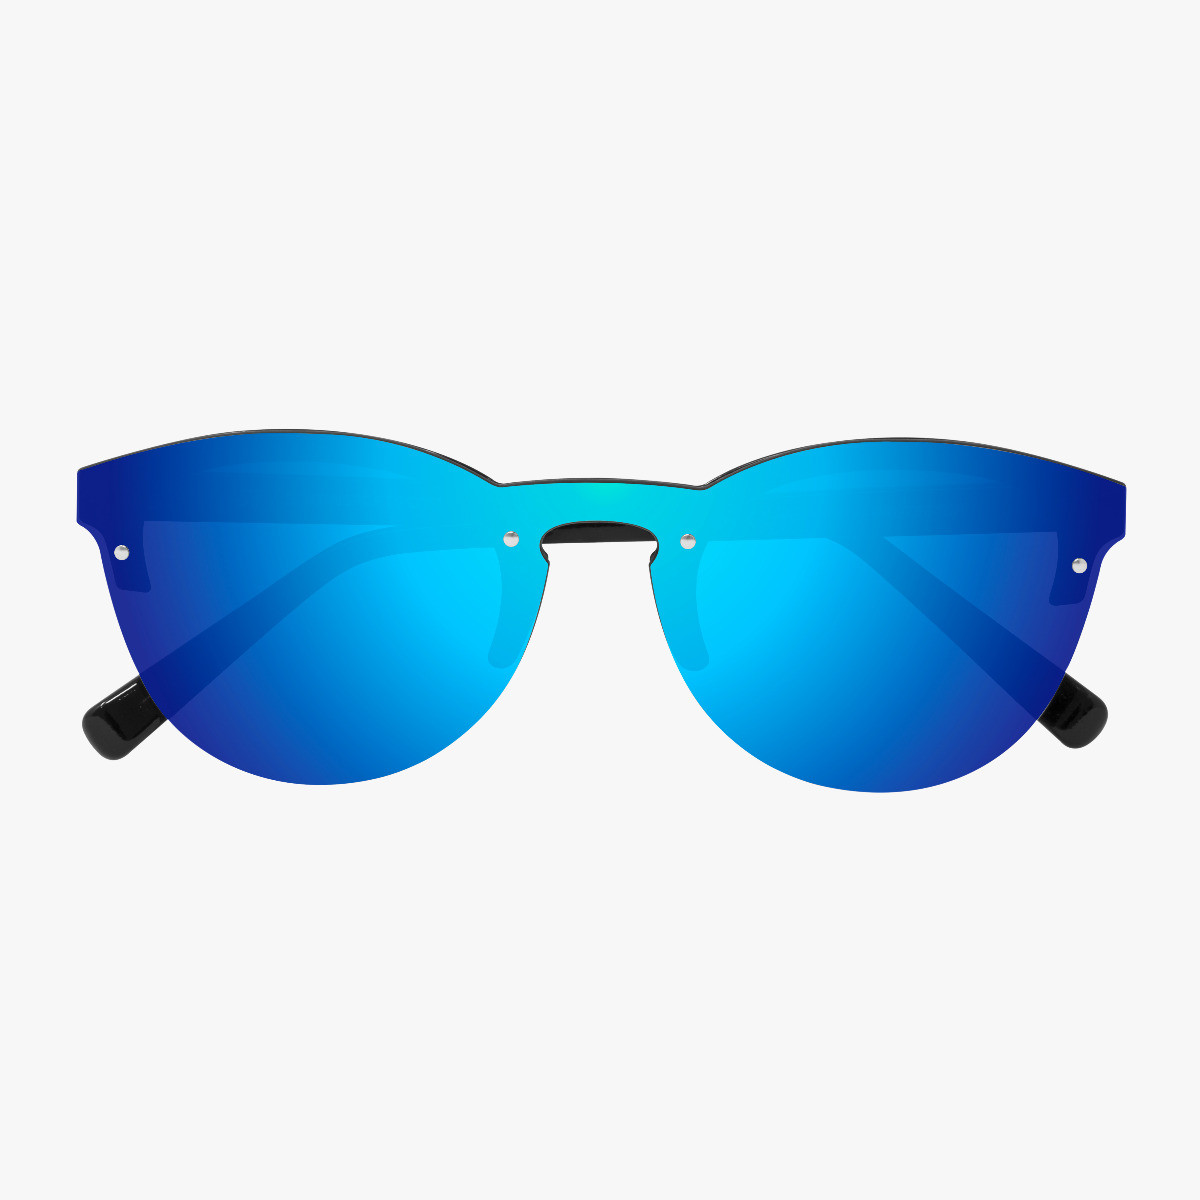 Scicon Sports | Protector Lifestyle Unisex Sunglasses - Black Frame, Blue Lens - EY170302